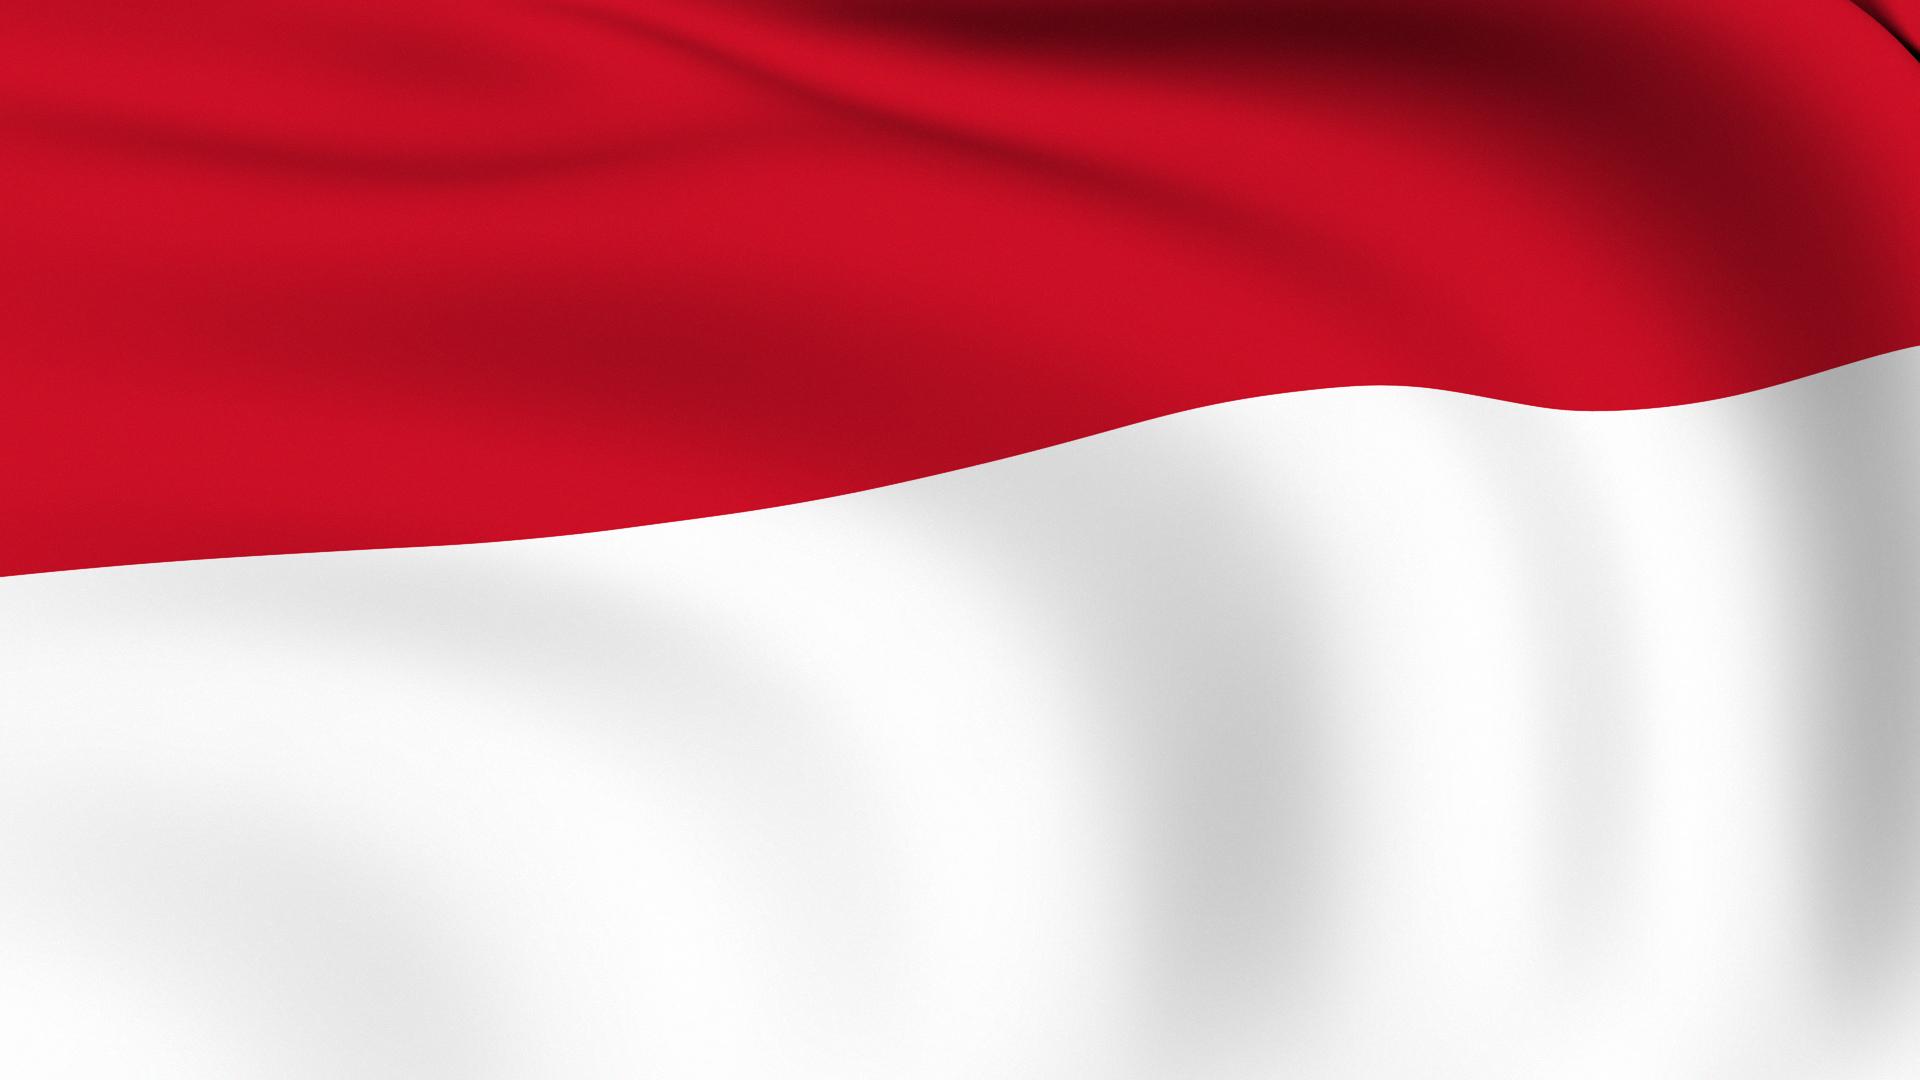 Bendera Merah Putih 17 Agustus 2020 Arina Bevin